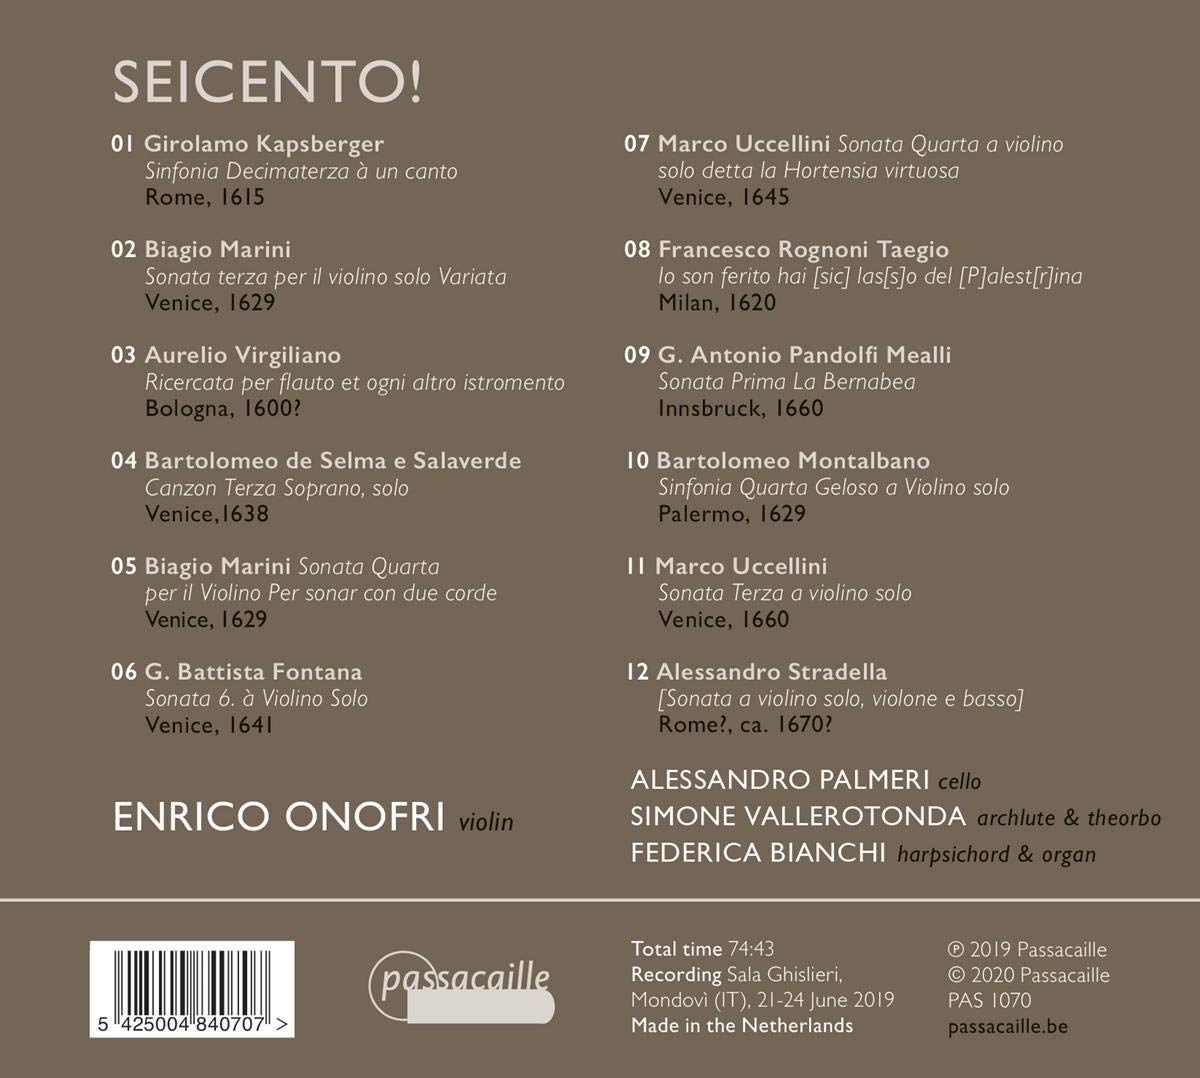 Enrico Onofri 17세기 초 이탈리아 바이올린 음악 (Seicento! - The Virtuoso Early Italian Violin) 